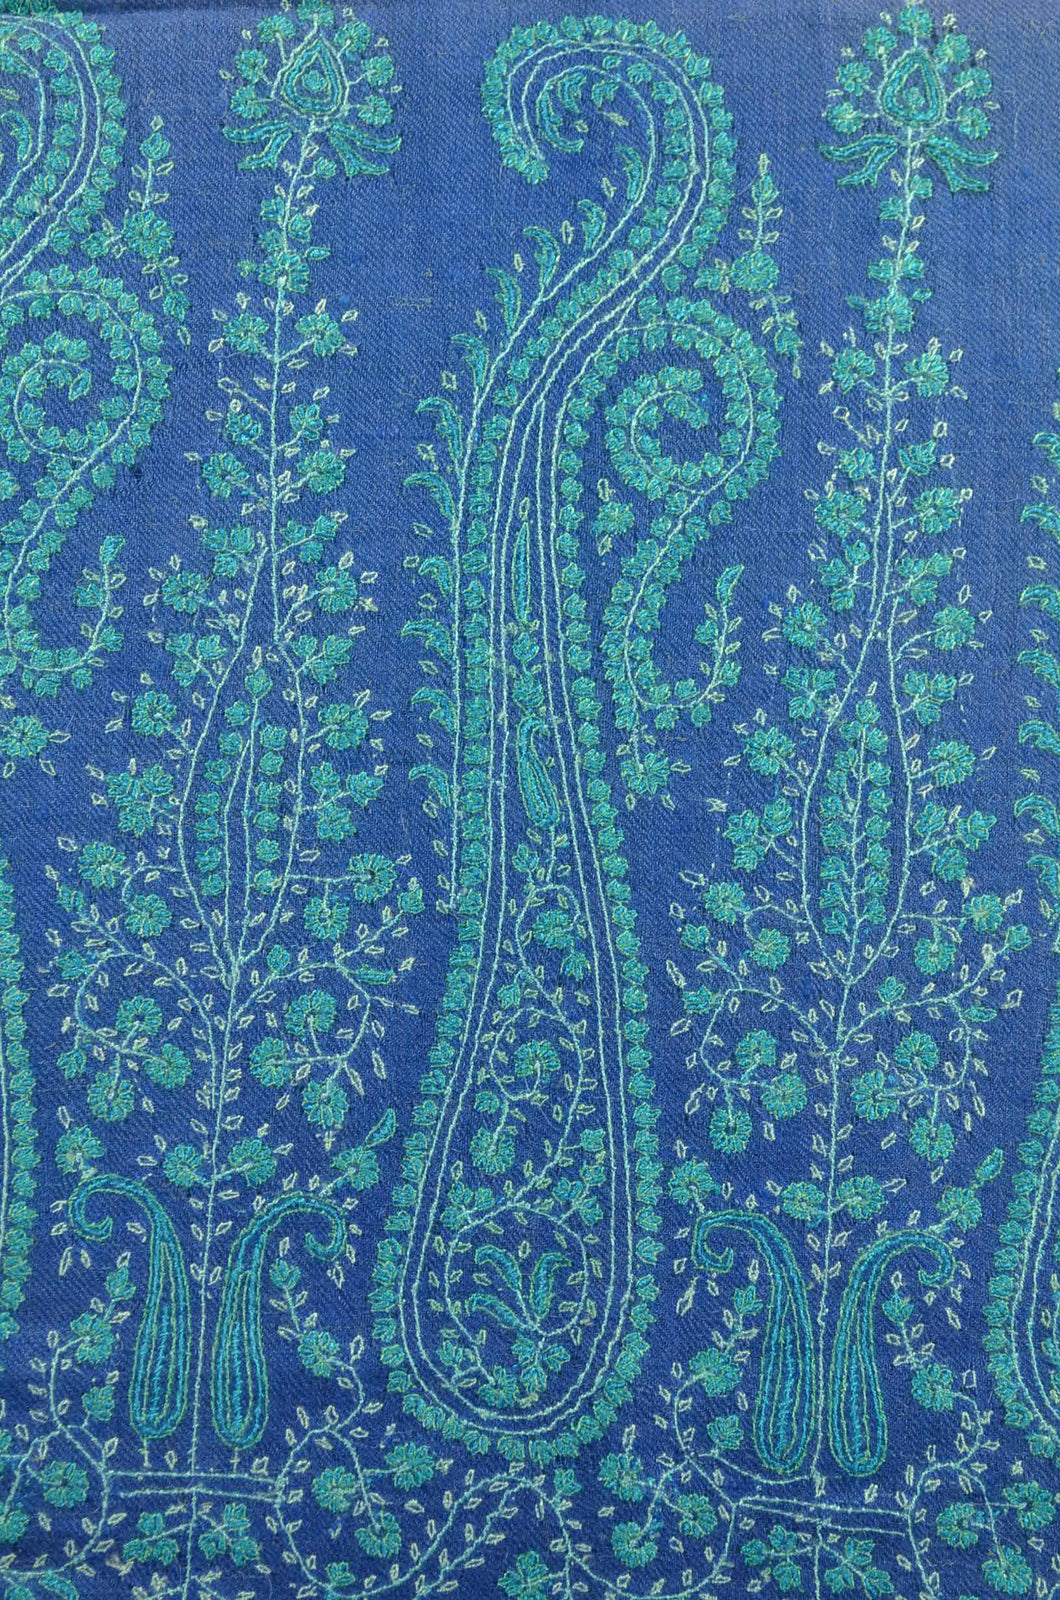 Blue Border Embroidery Cashmere Pashmina Shawl